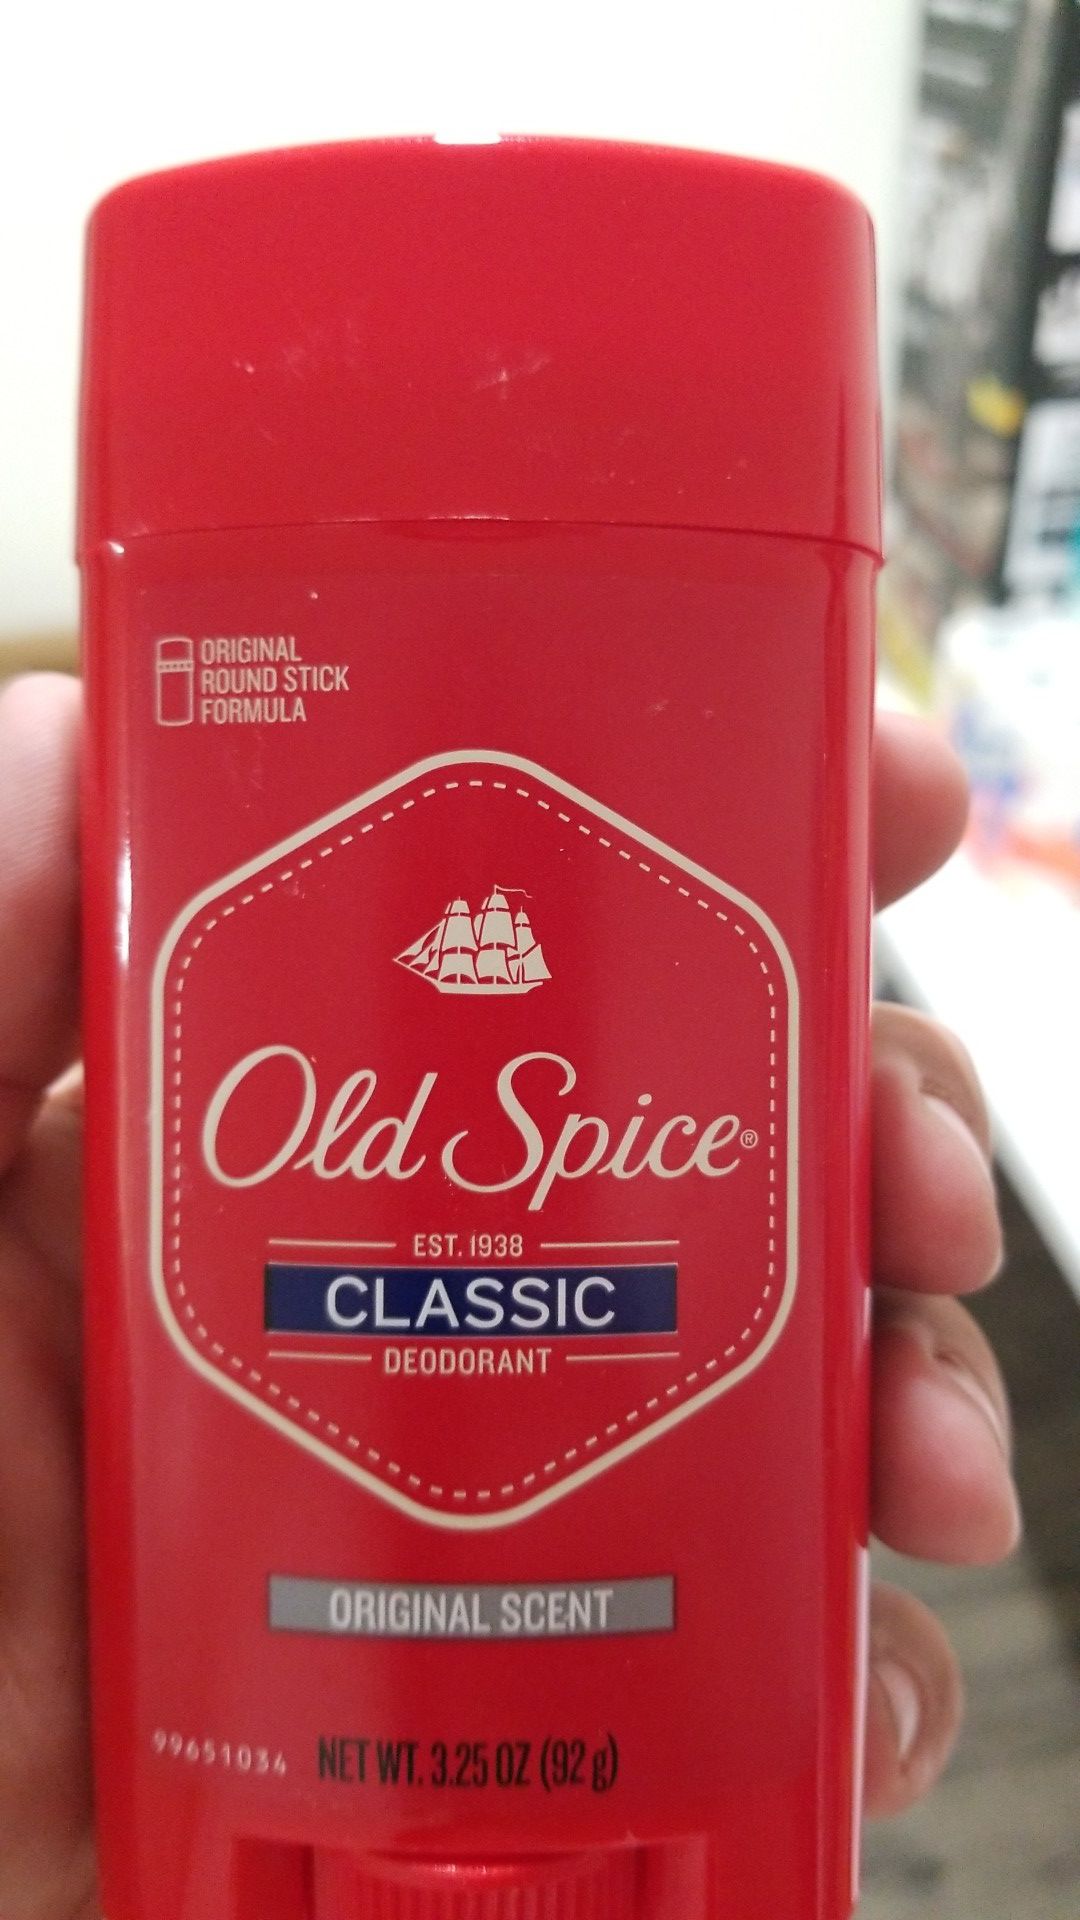 Old Spice classic deodorant, fresh scent and Original Scent